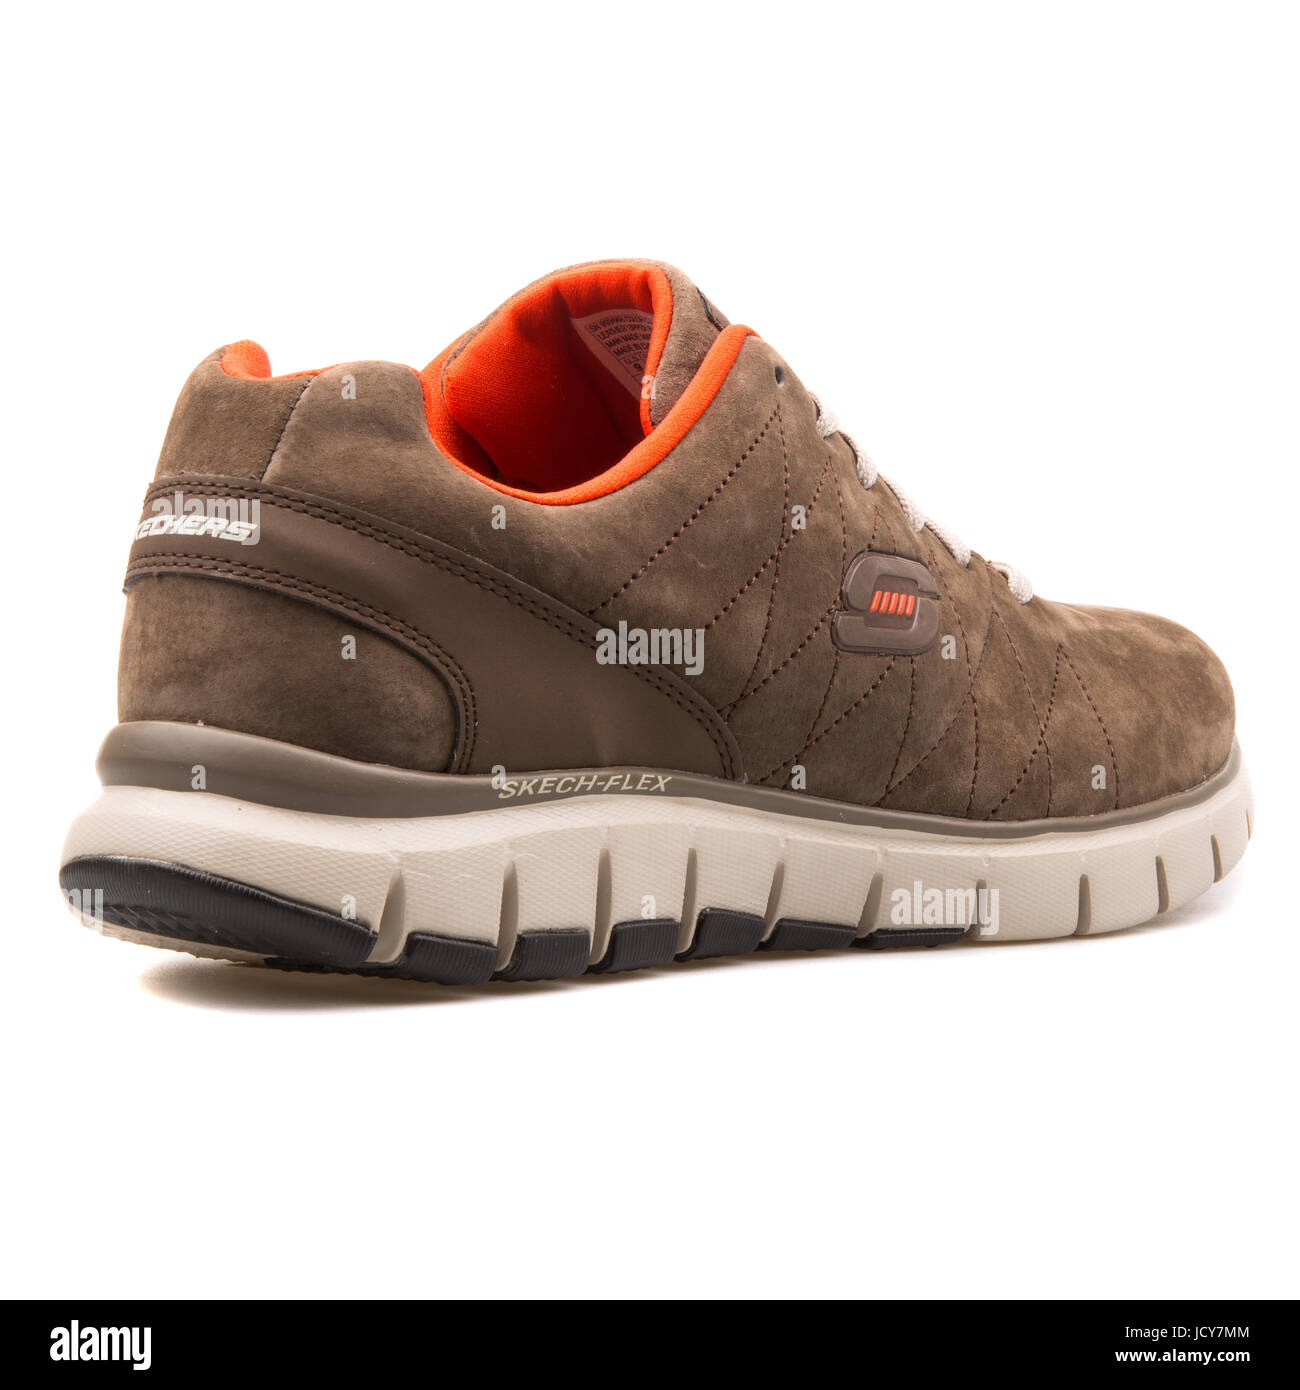 Skechers Skech-Flex Natural Vigor Brown and Orange Men's Running Shoes -  999668-BROR Stock Photo - Alamy